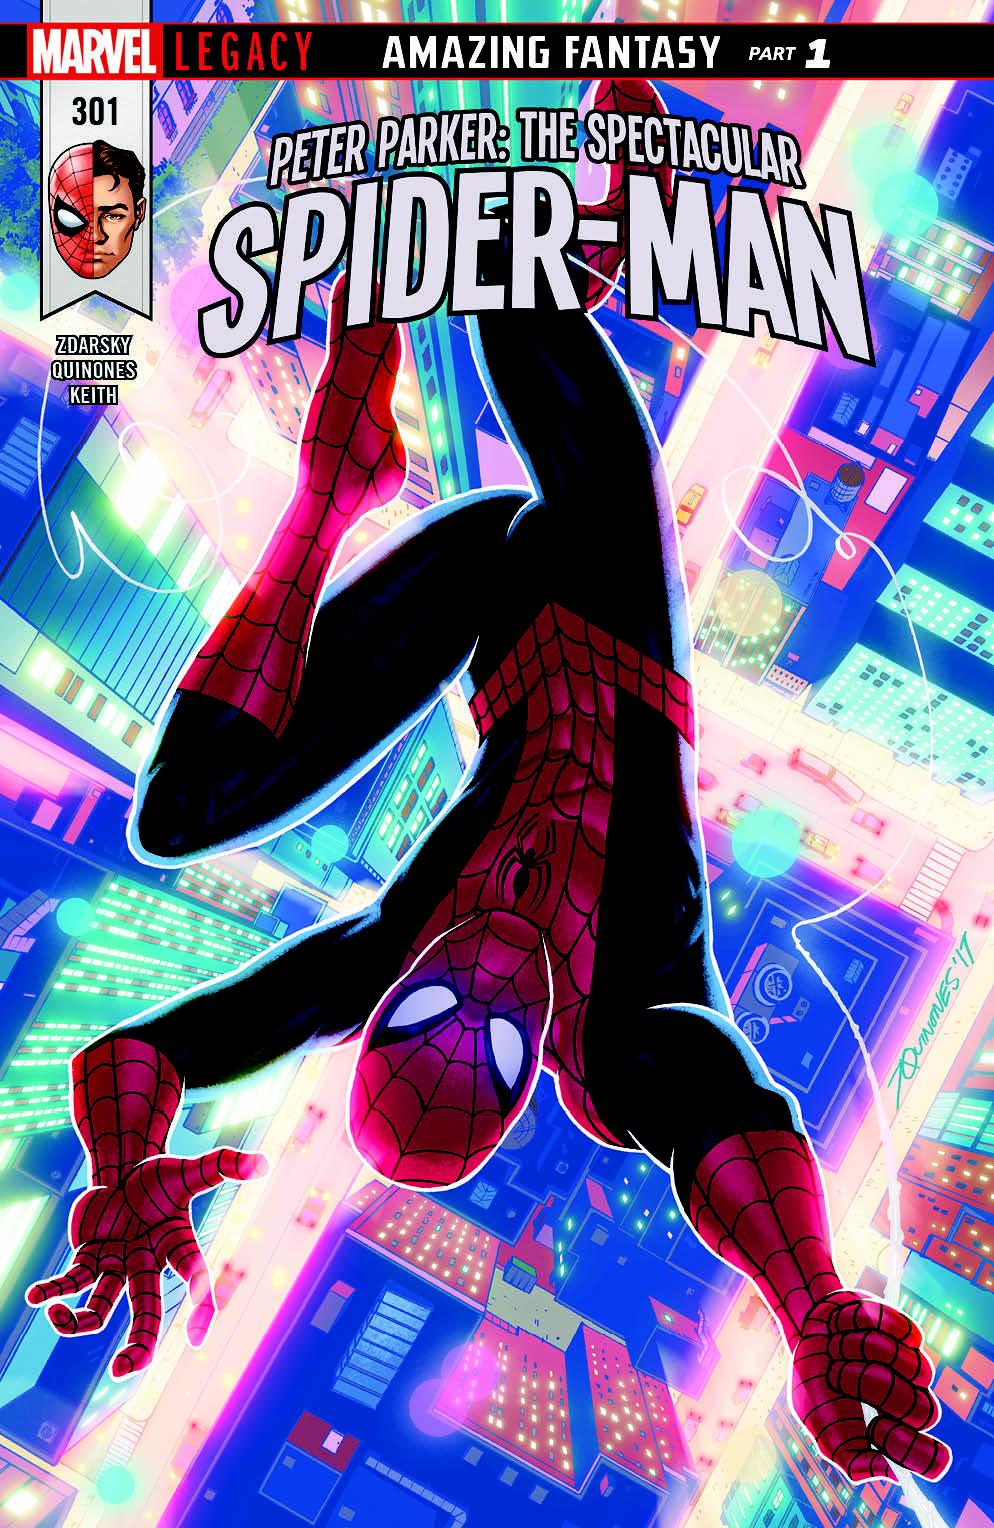 Peter Parker: The Spectacular Spider-Man Vol. 1 #301